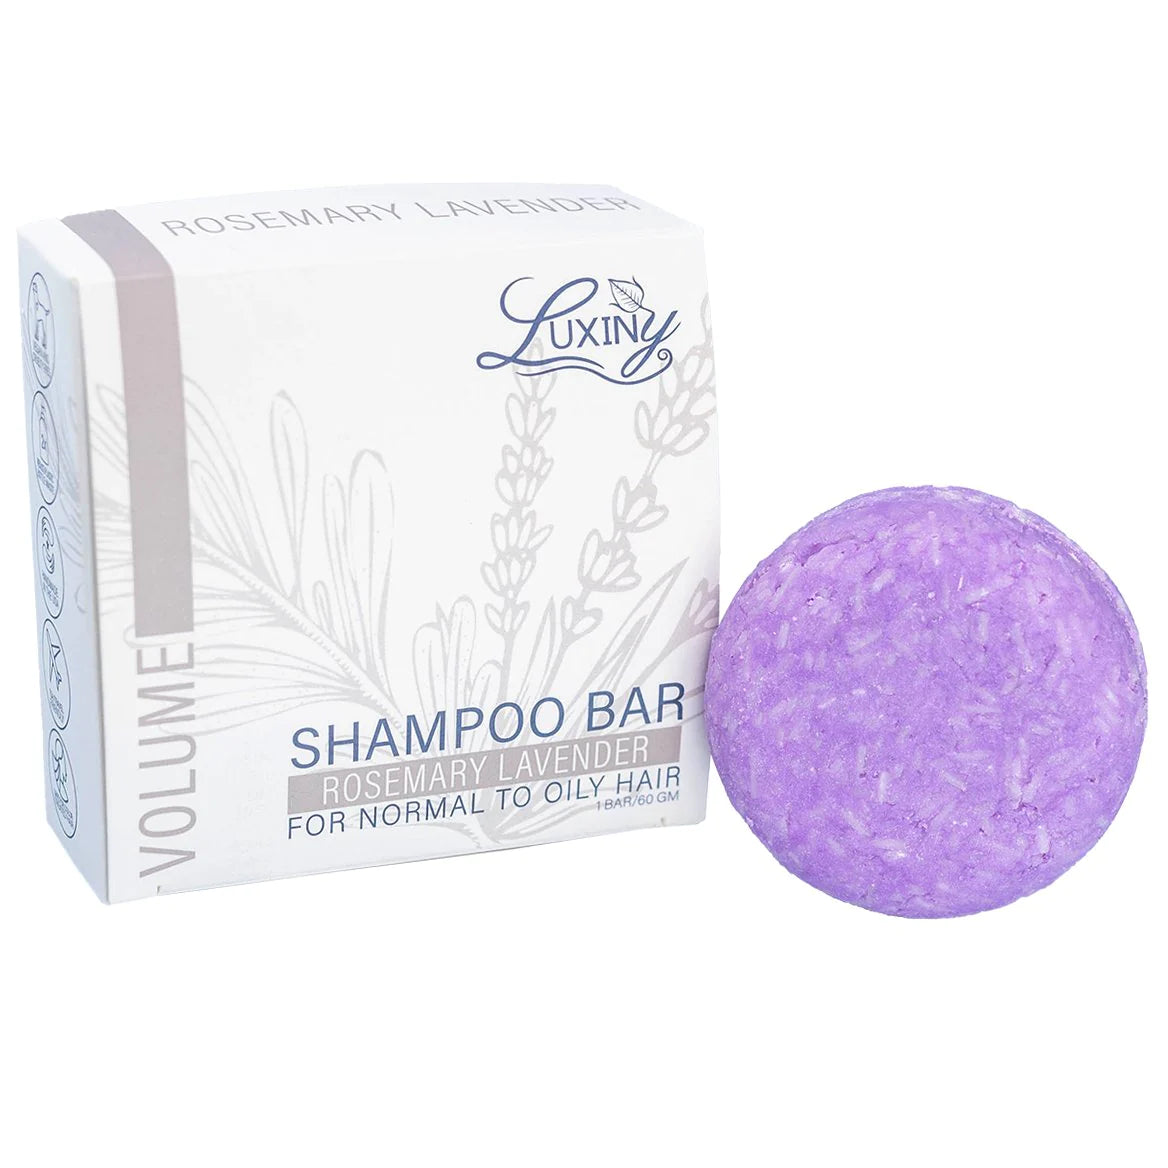 Luxiny Products - Eco-Friendly Shampoo Bars - Rosemary Lavender